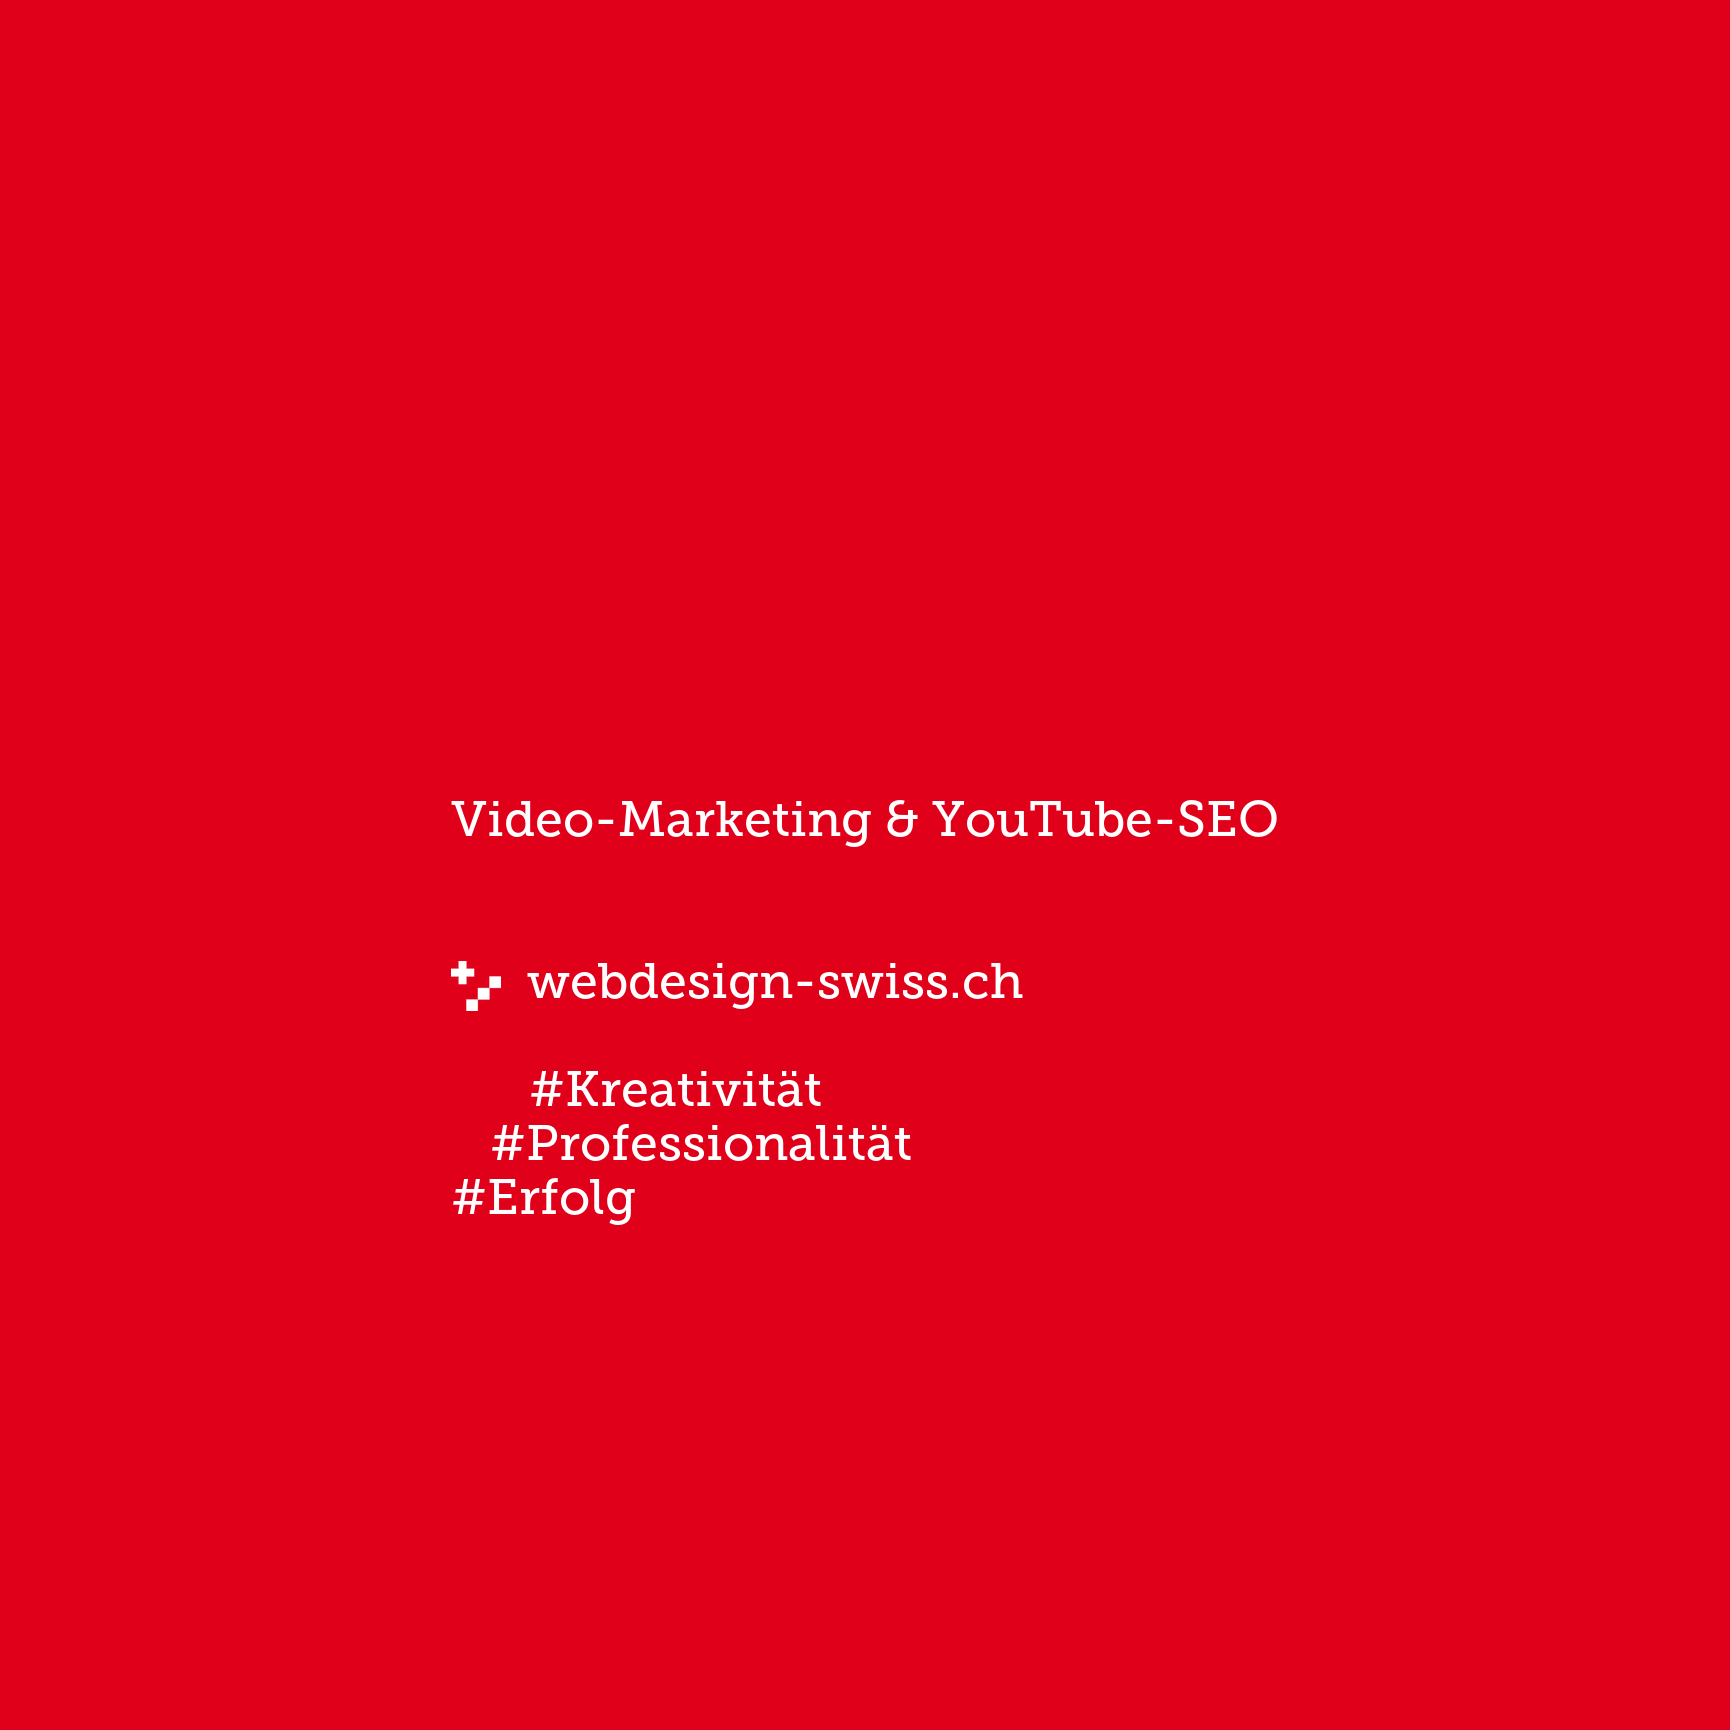 Video-Marketing & YouTube-SEO